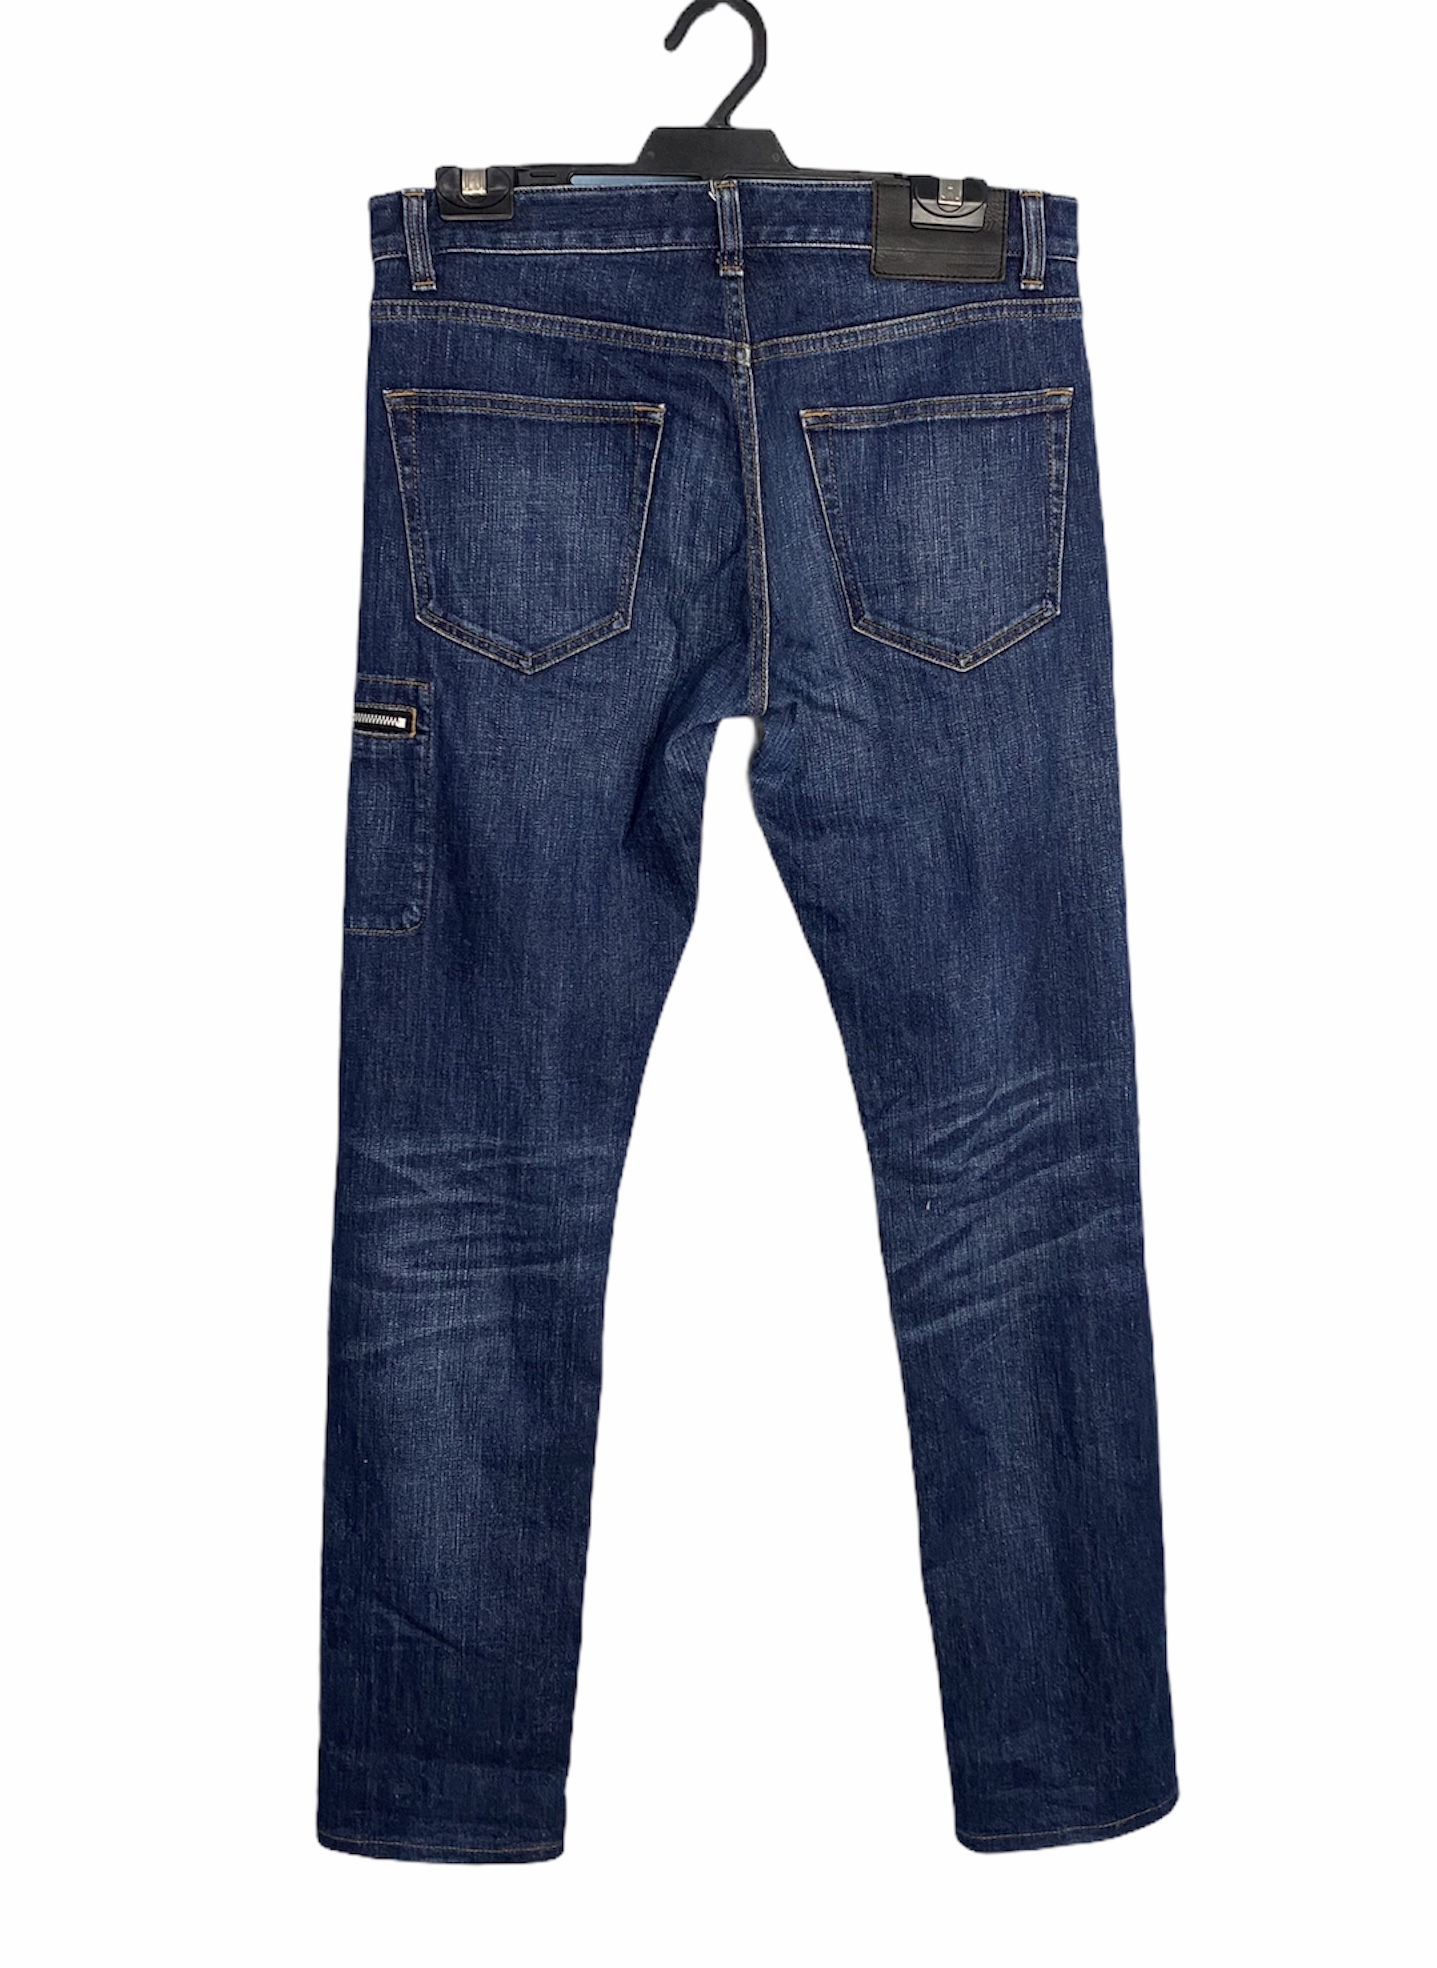 UNDERCOVER x Uniqlo Mens Jeans size 30 Inches - 2